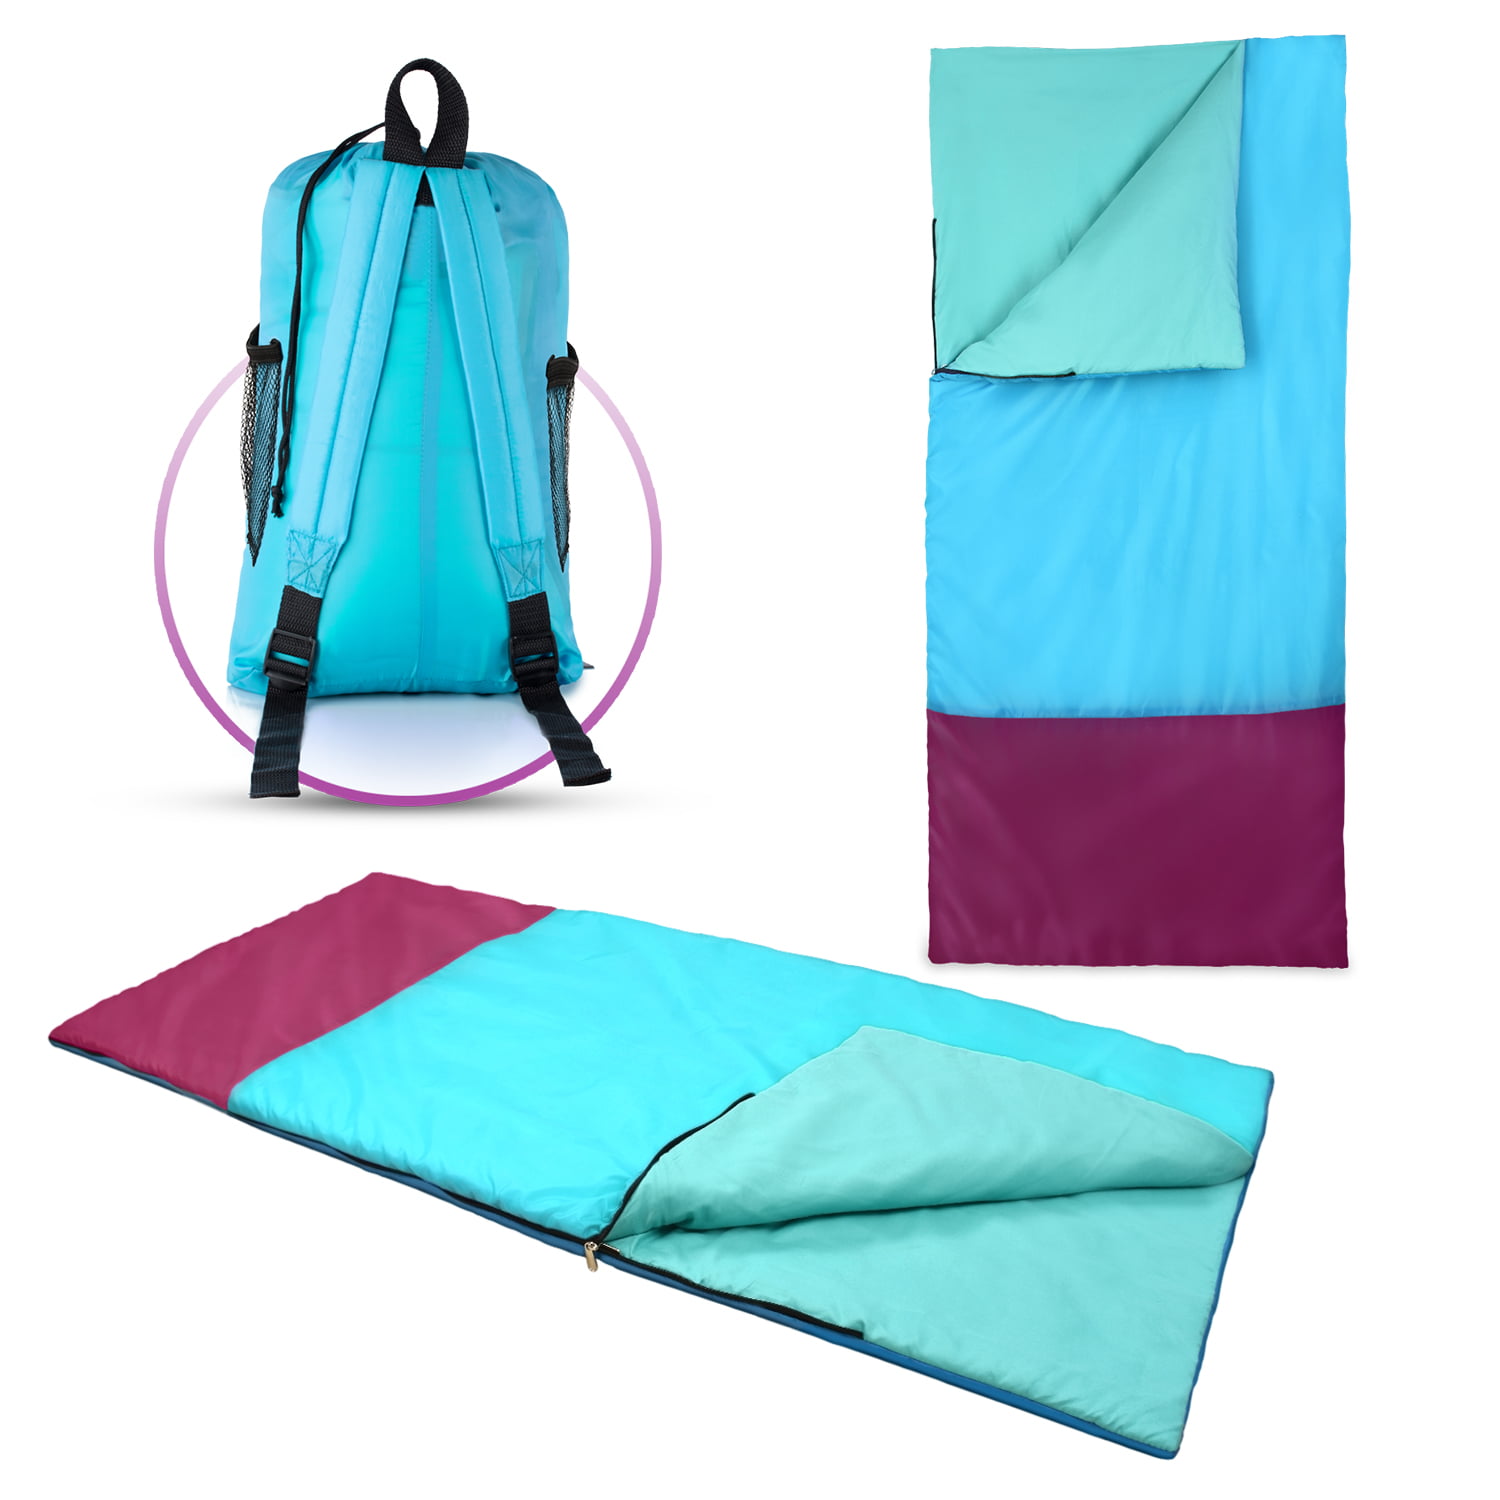 children's sleeping bag sets